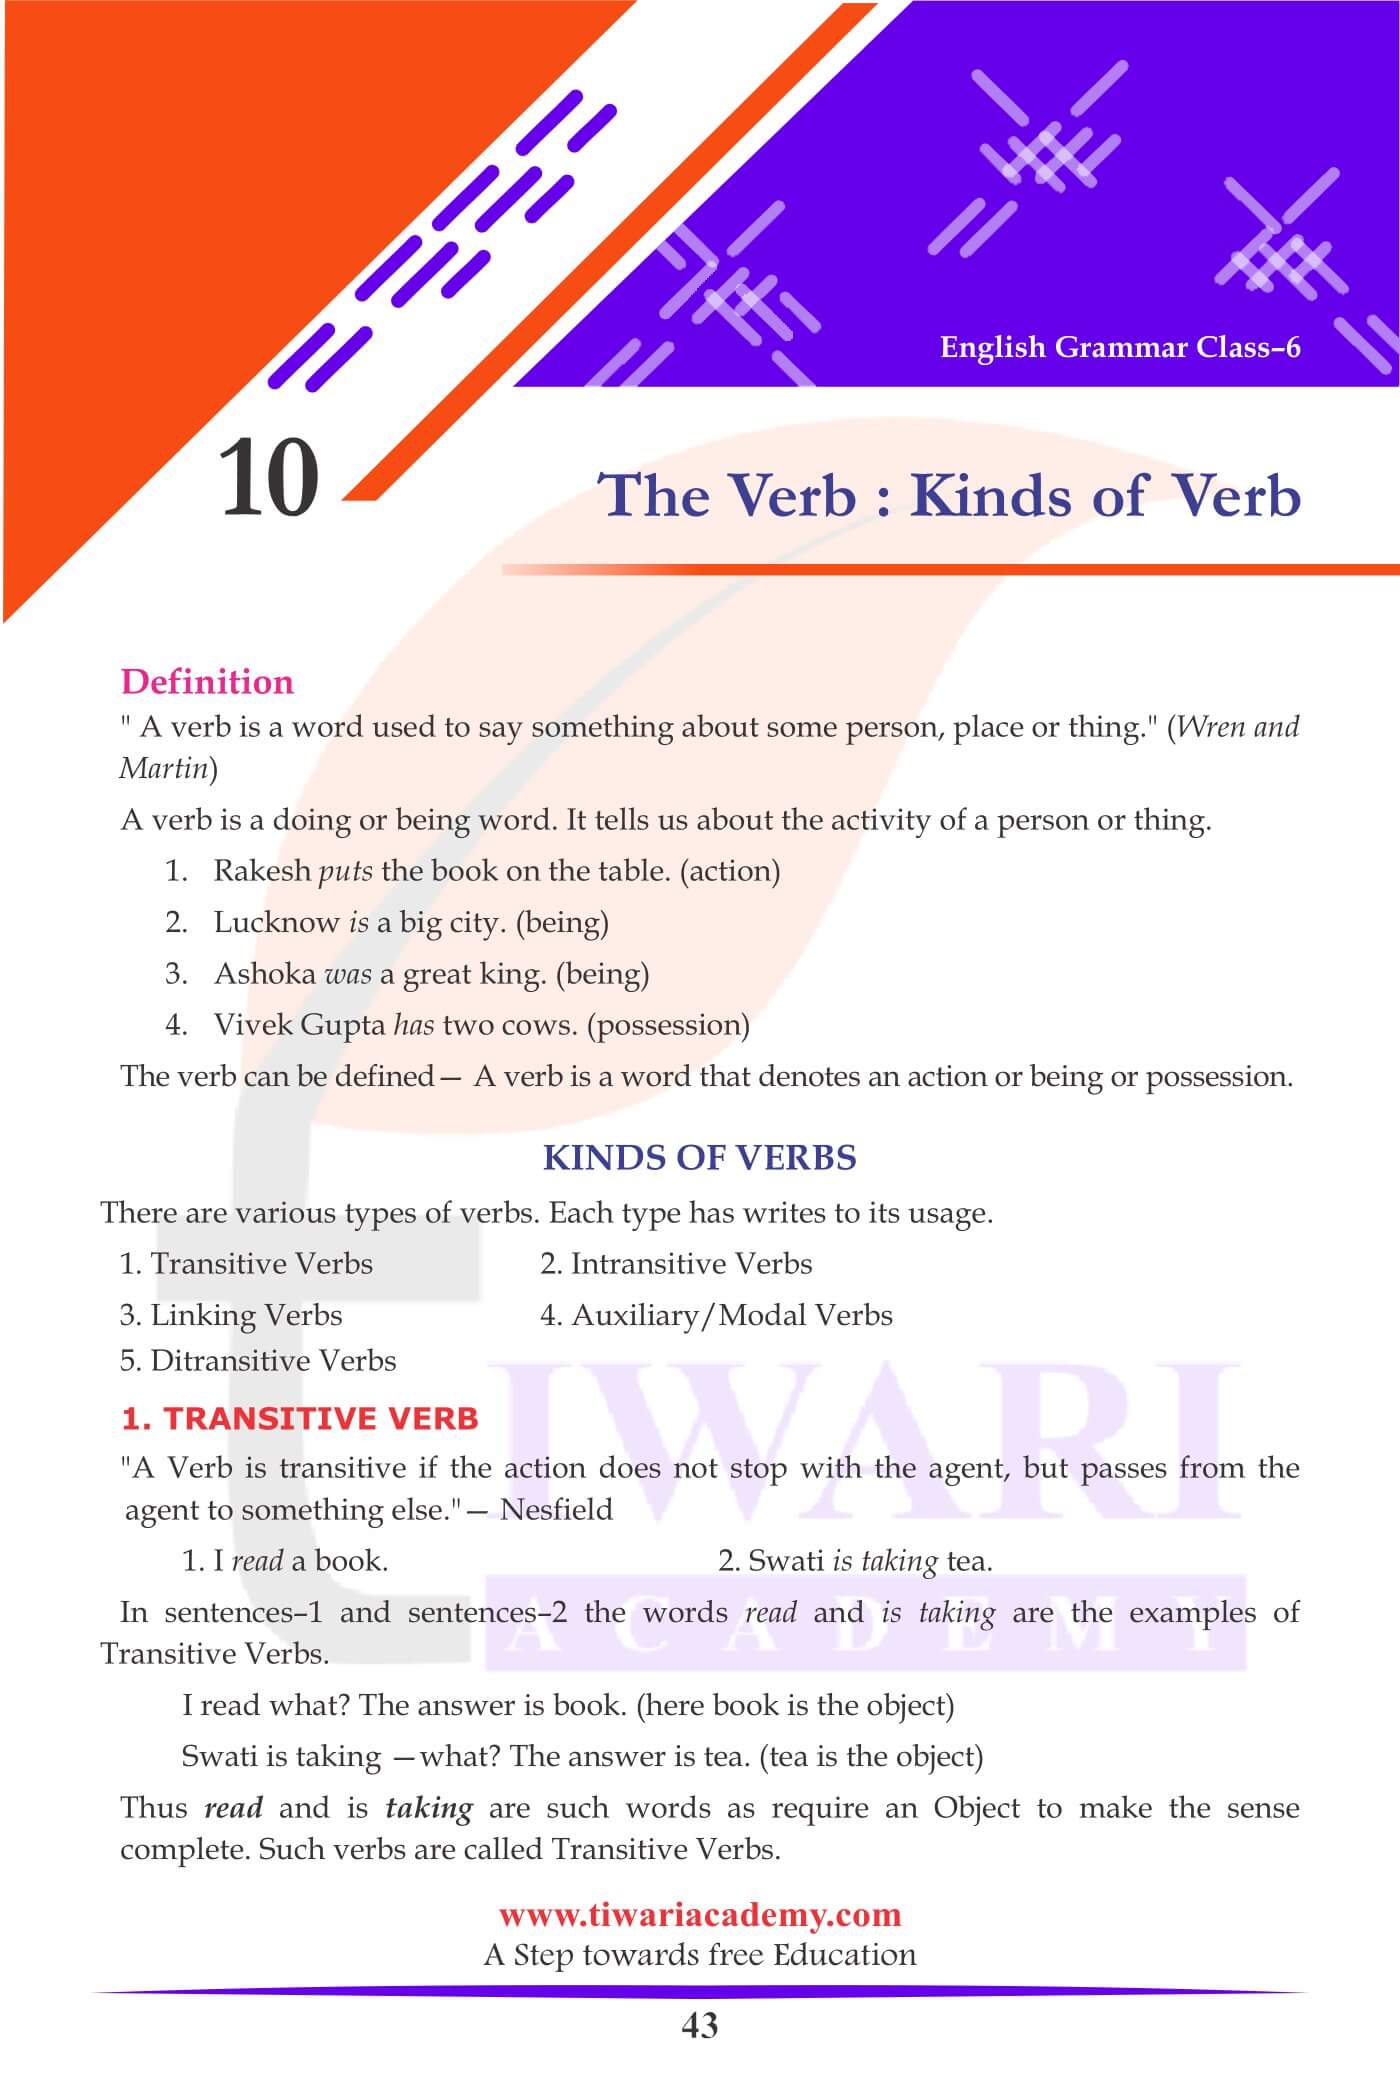 Class 6 English Grammar Chapter 10 The Verb Kinds of Verb